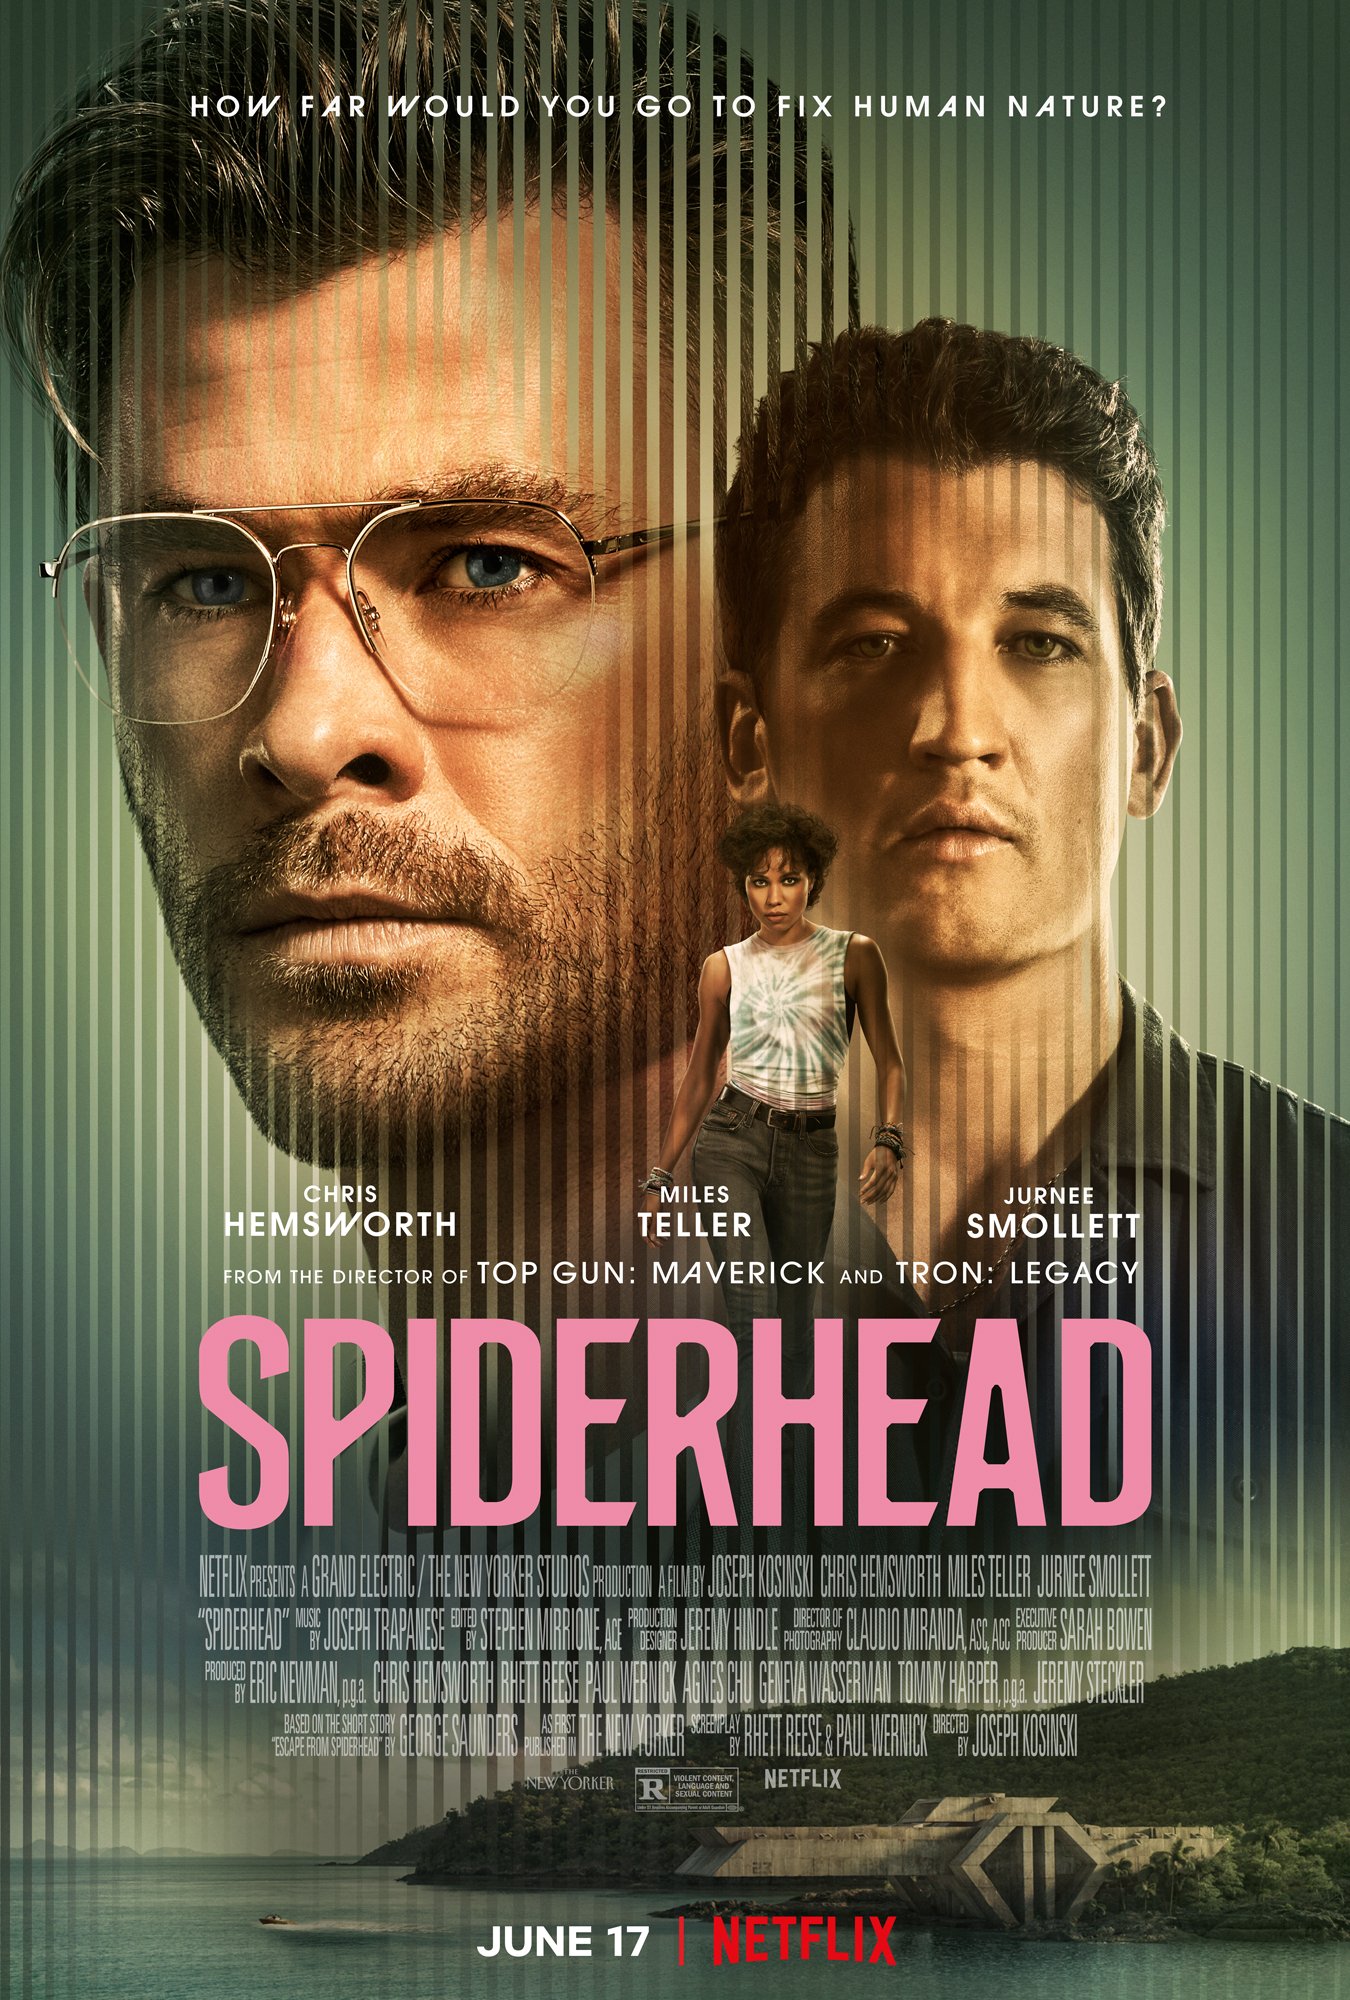 Spiderhead image © Netflix